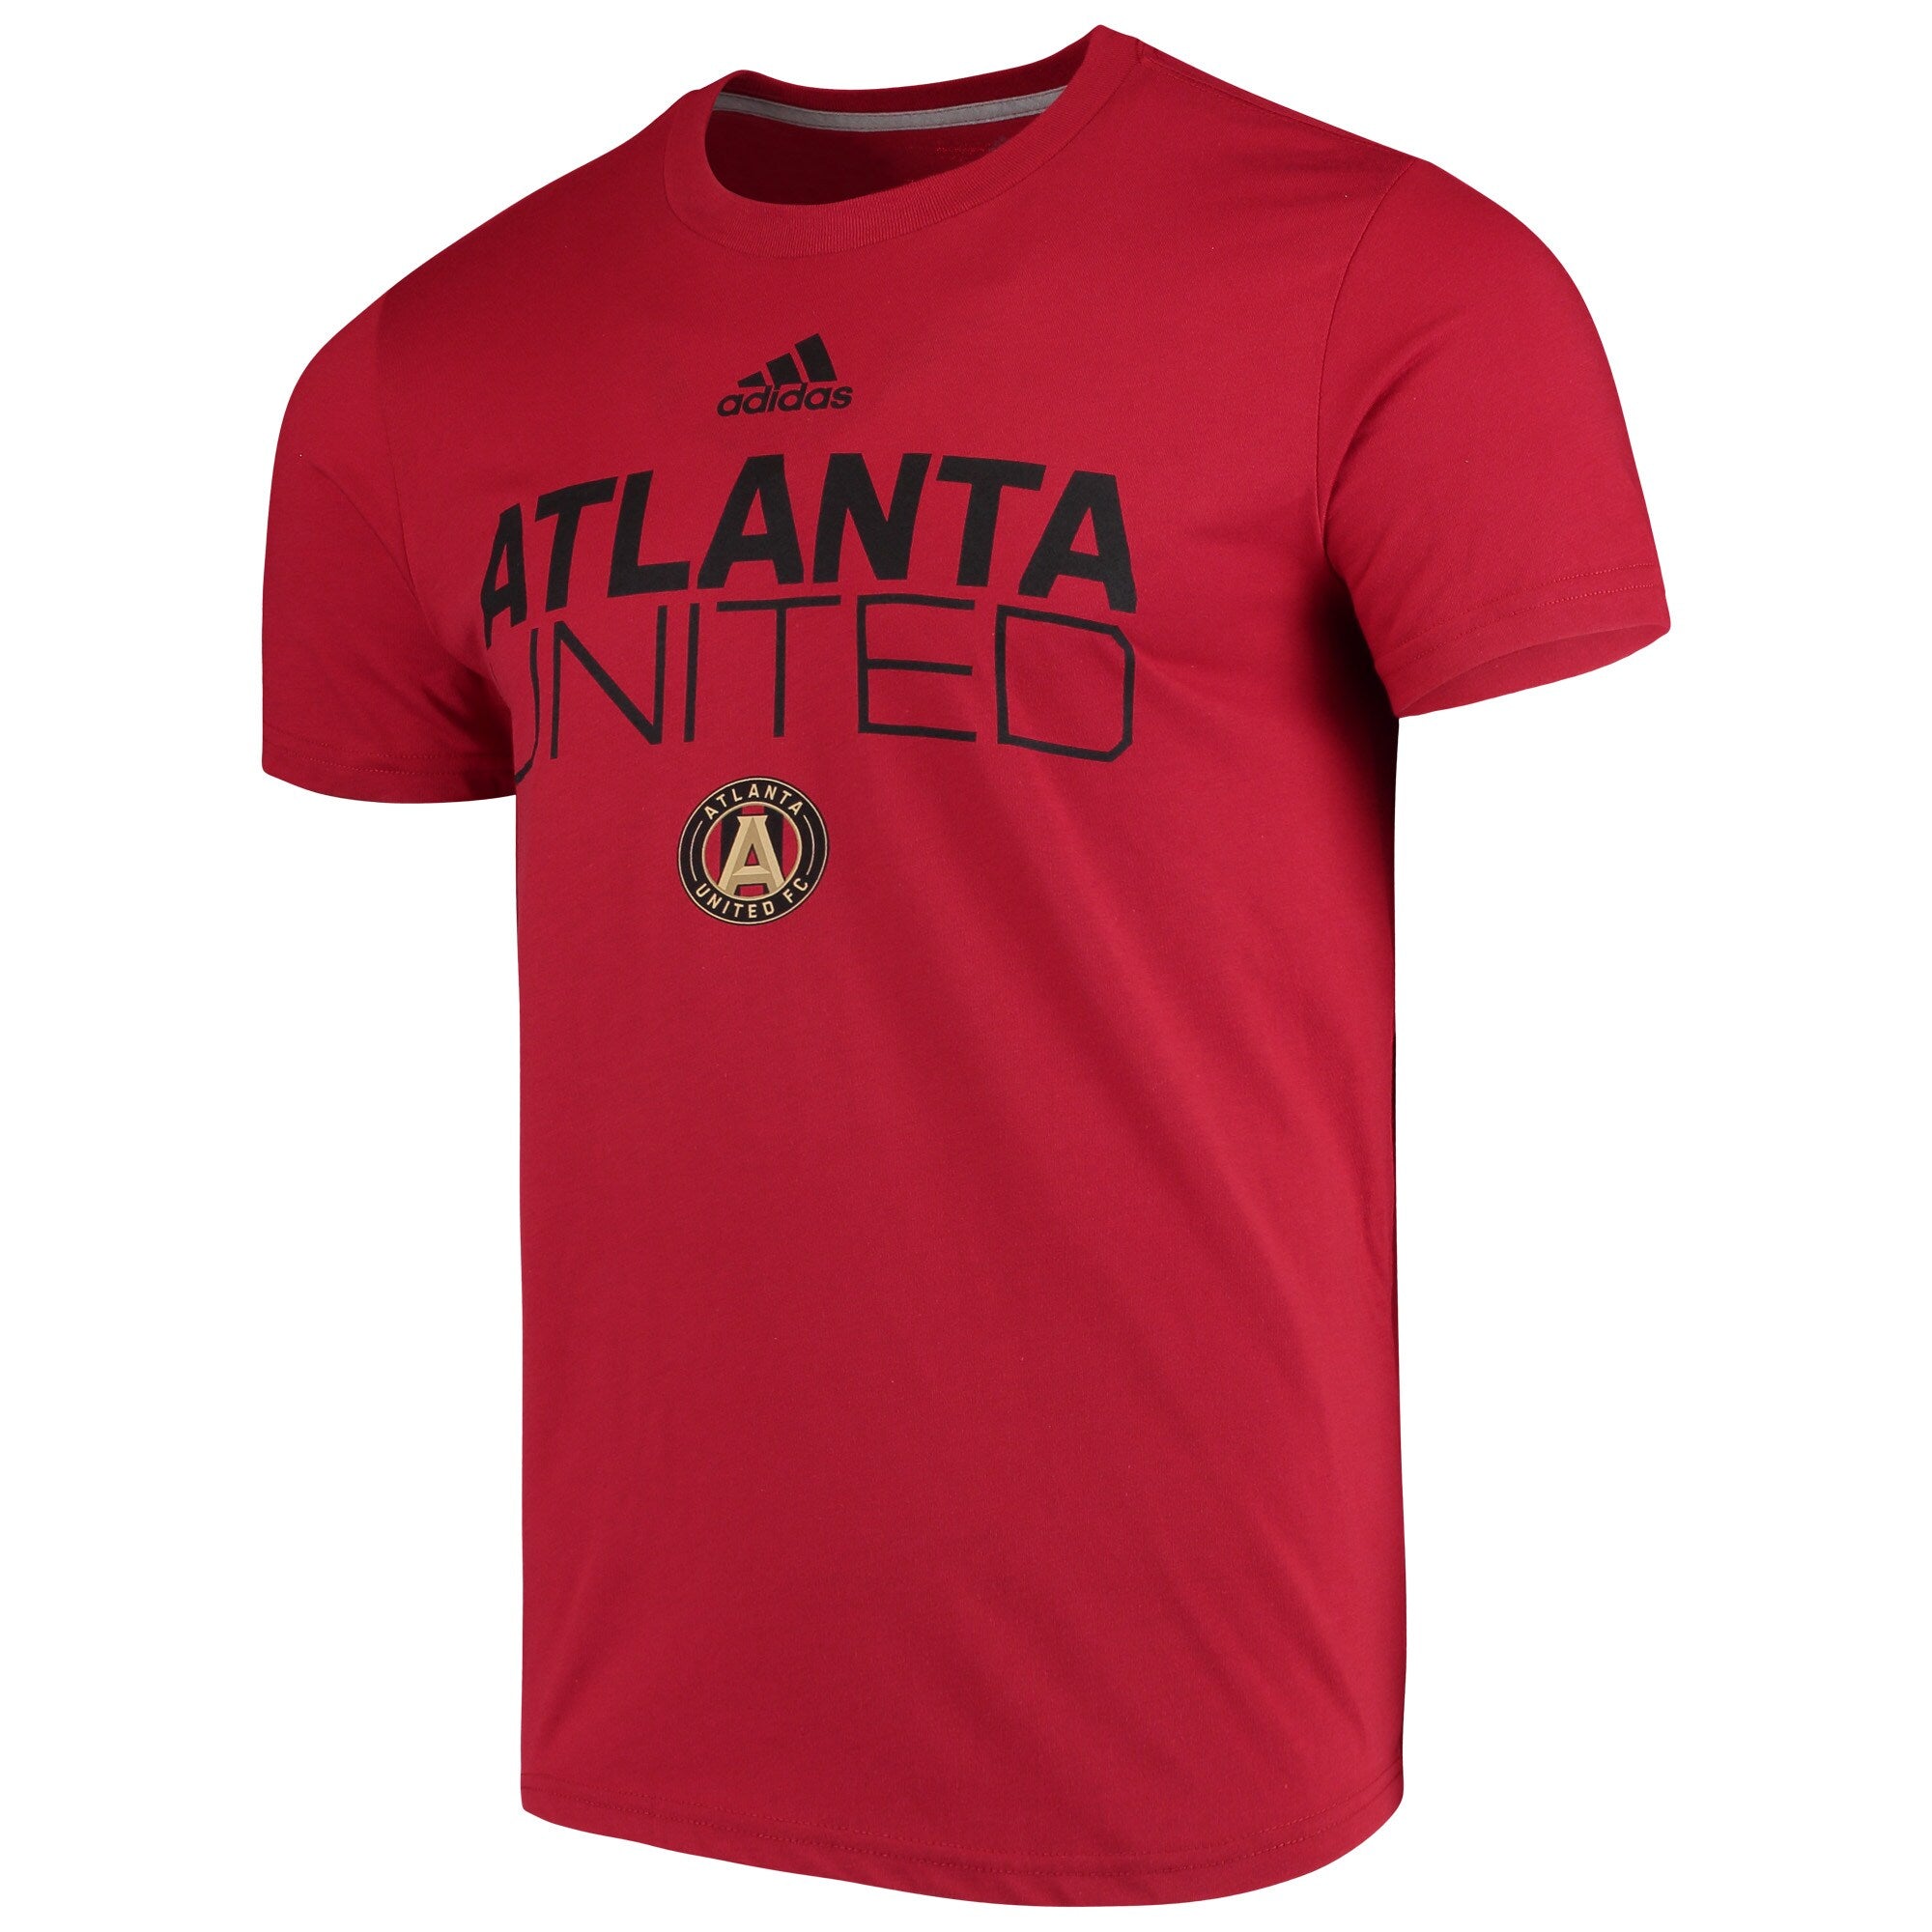 Adidas Atlanta United FC adidas Red Locker Stacked climalite Short Sleeve T-Shirt